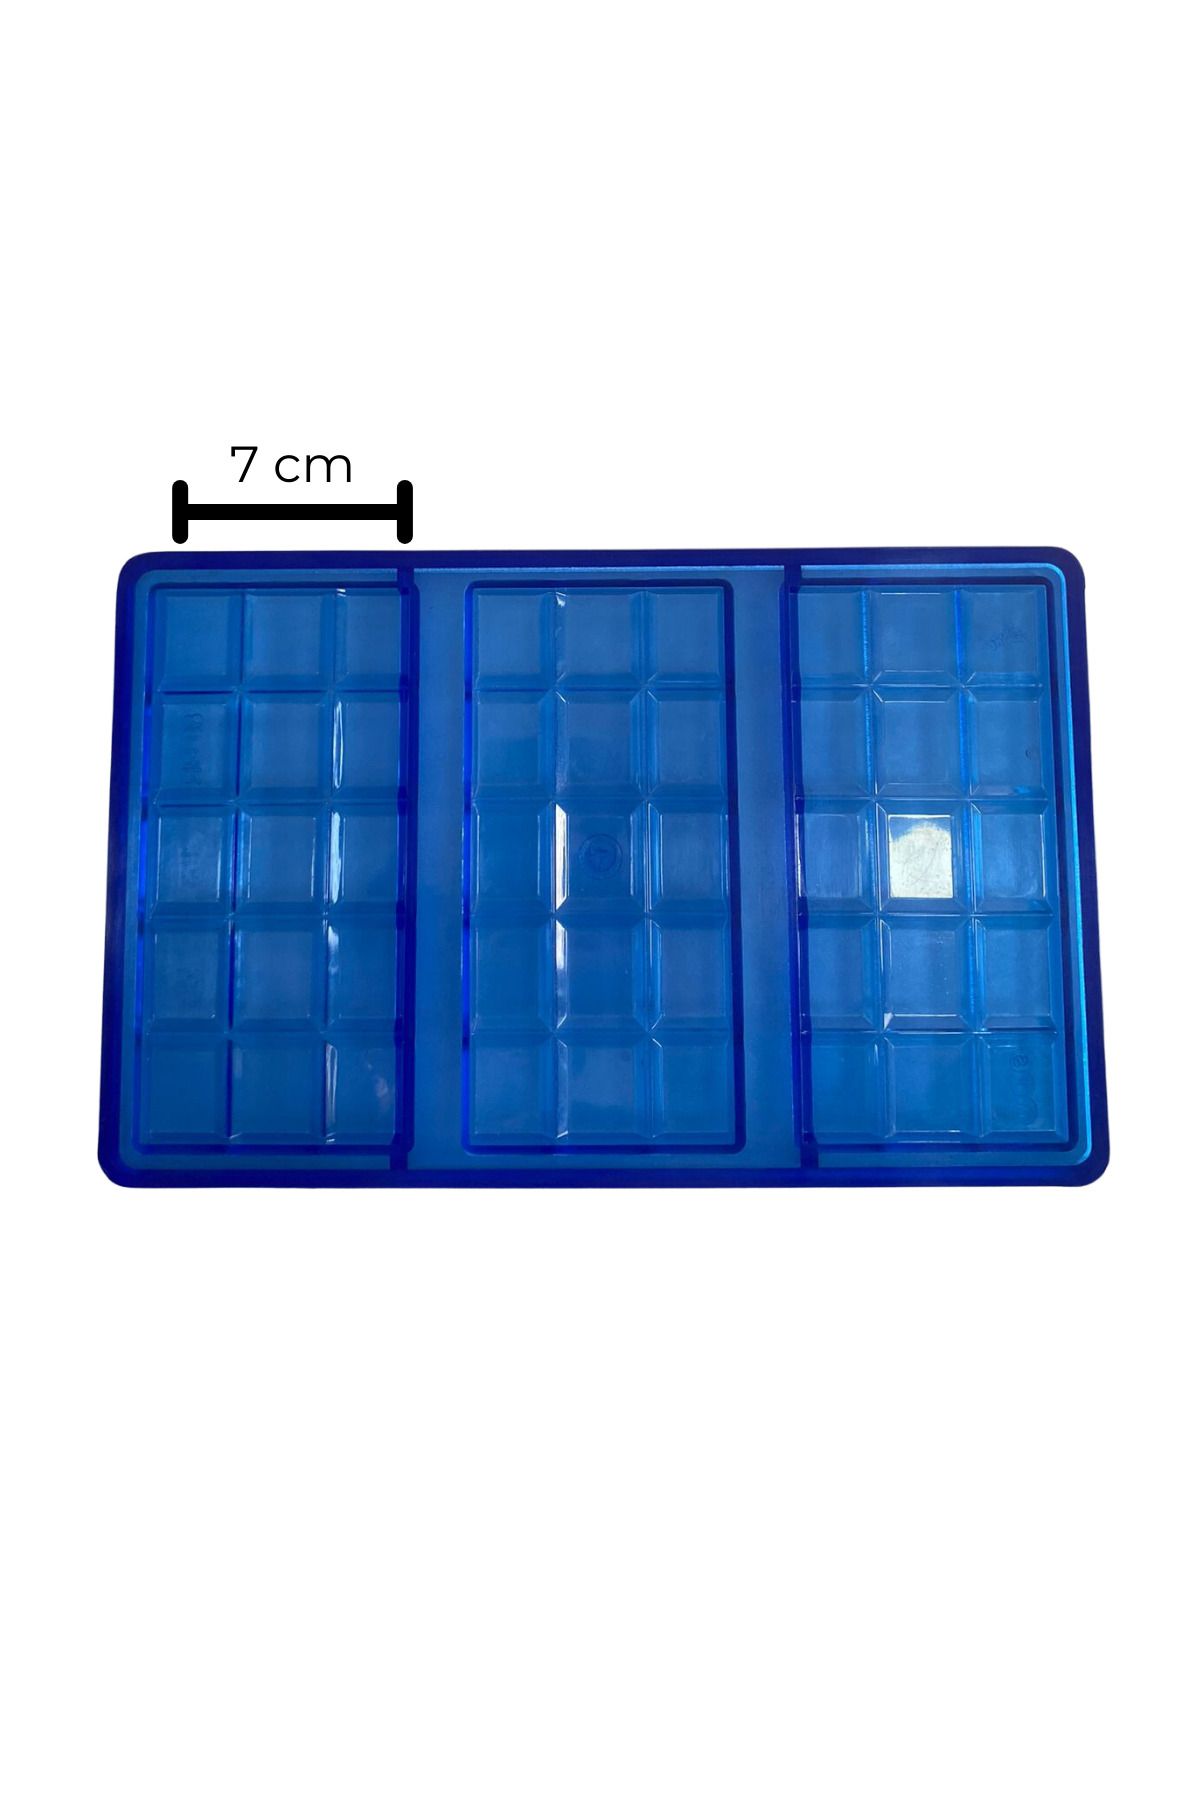 PASTRY PLANET Polikarbon Tablet Çikolata Kalıbı [Mavi Renk]